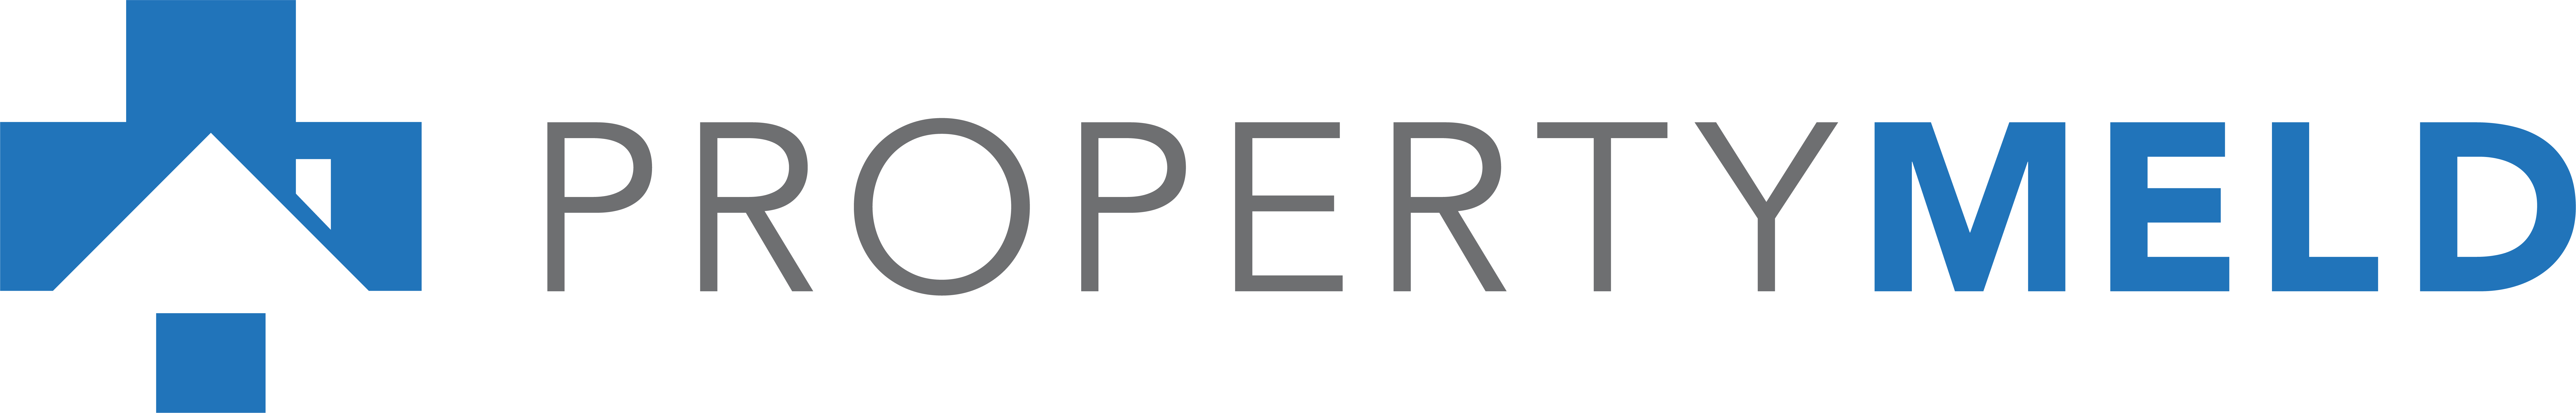 PropertyMeld-Logo-Header